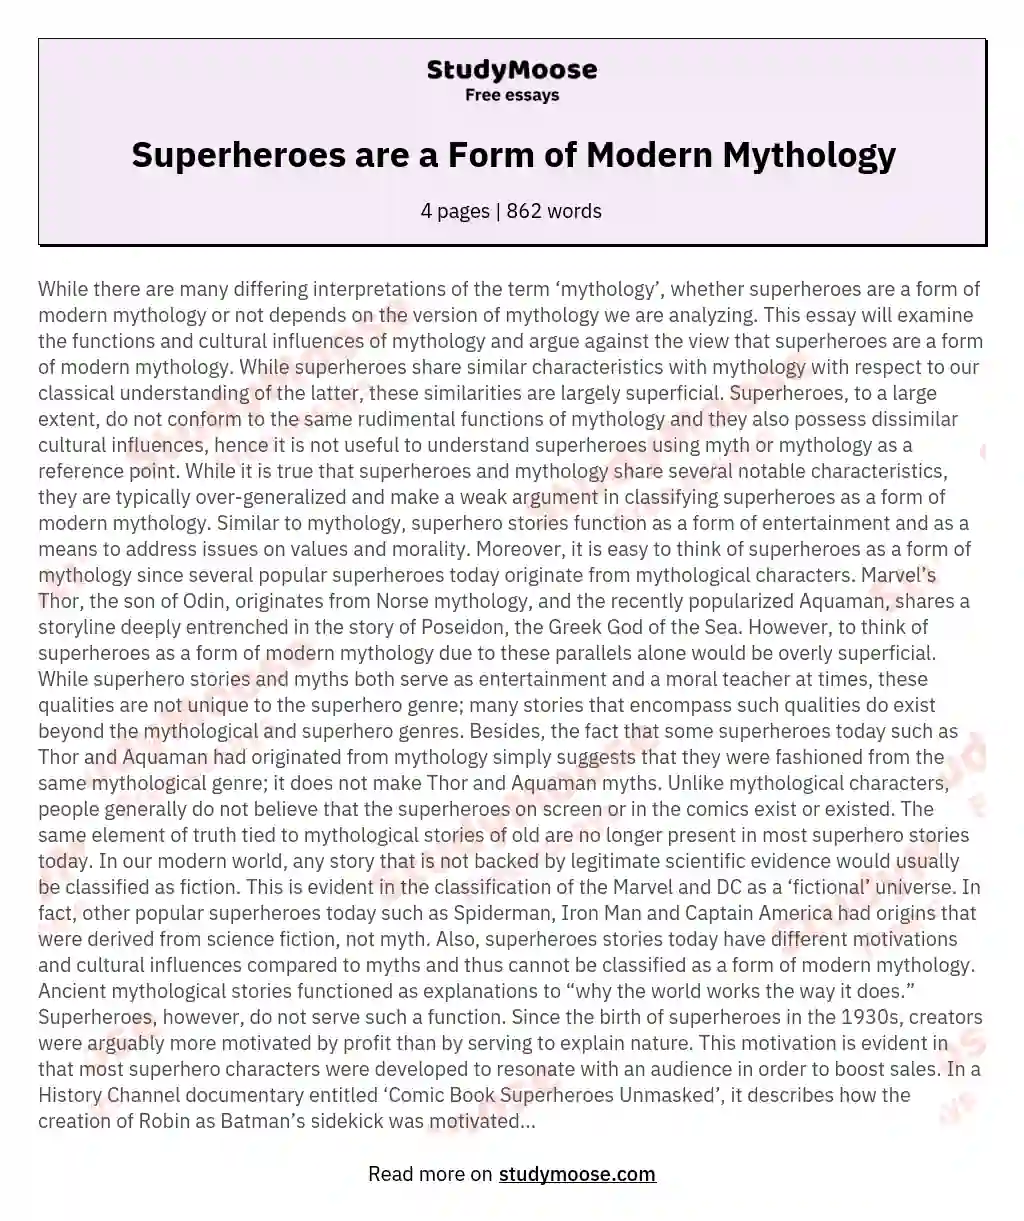 Superheroes are a Form of Modern Mythology essay